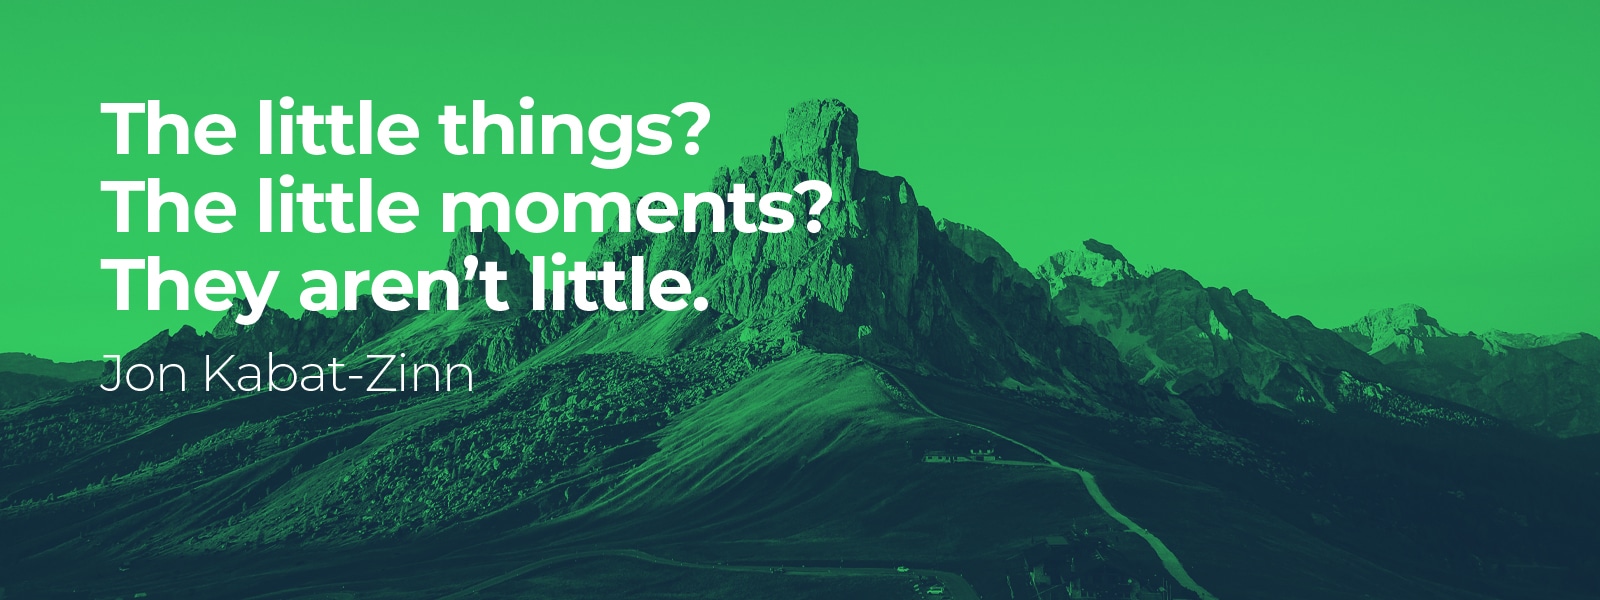 The little things? The little moments? They aren't little - Jon Kabat-Zinn